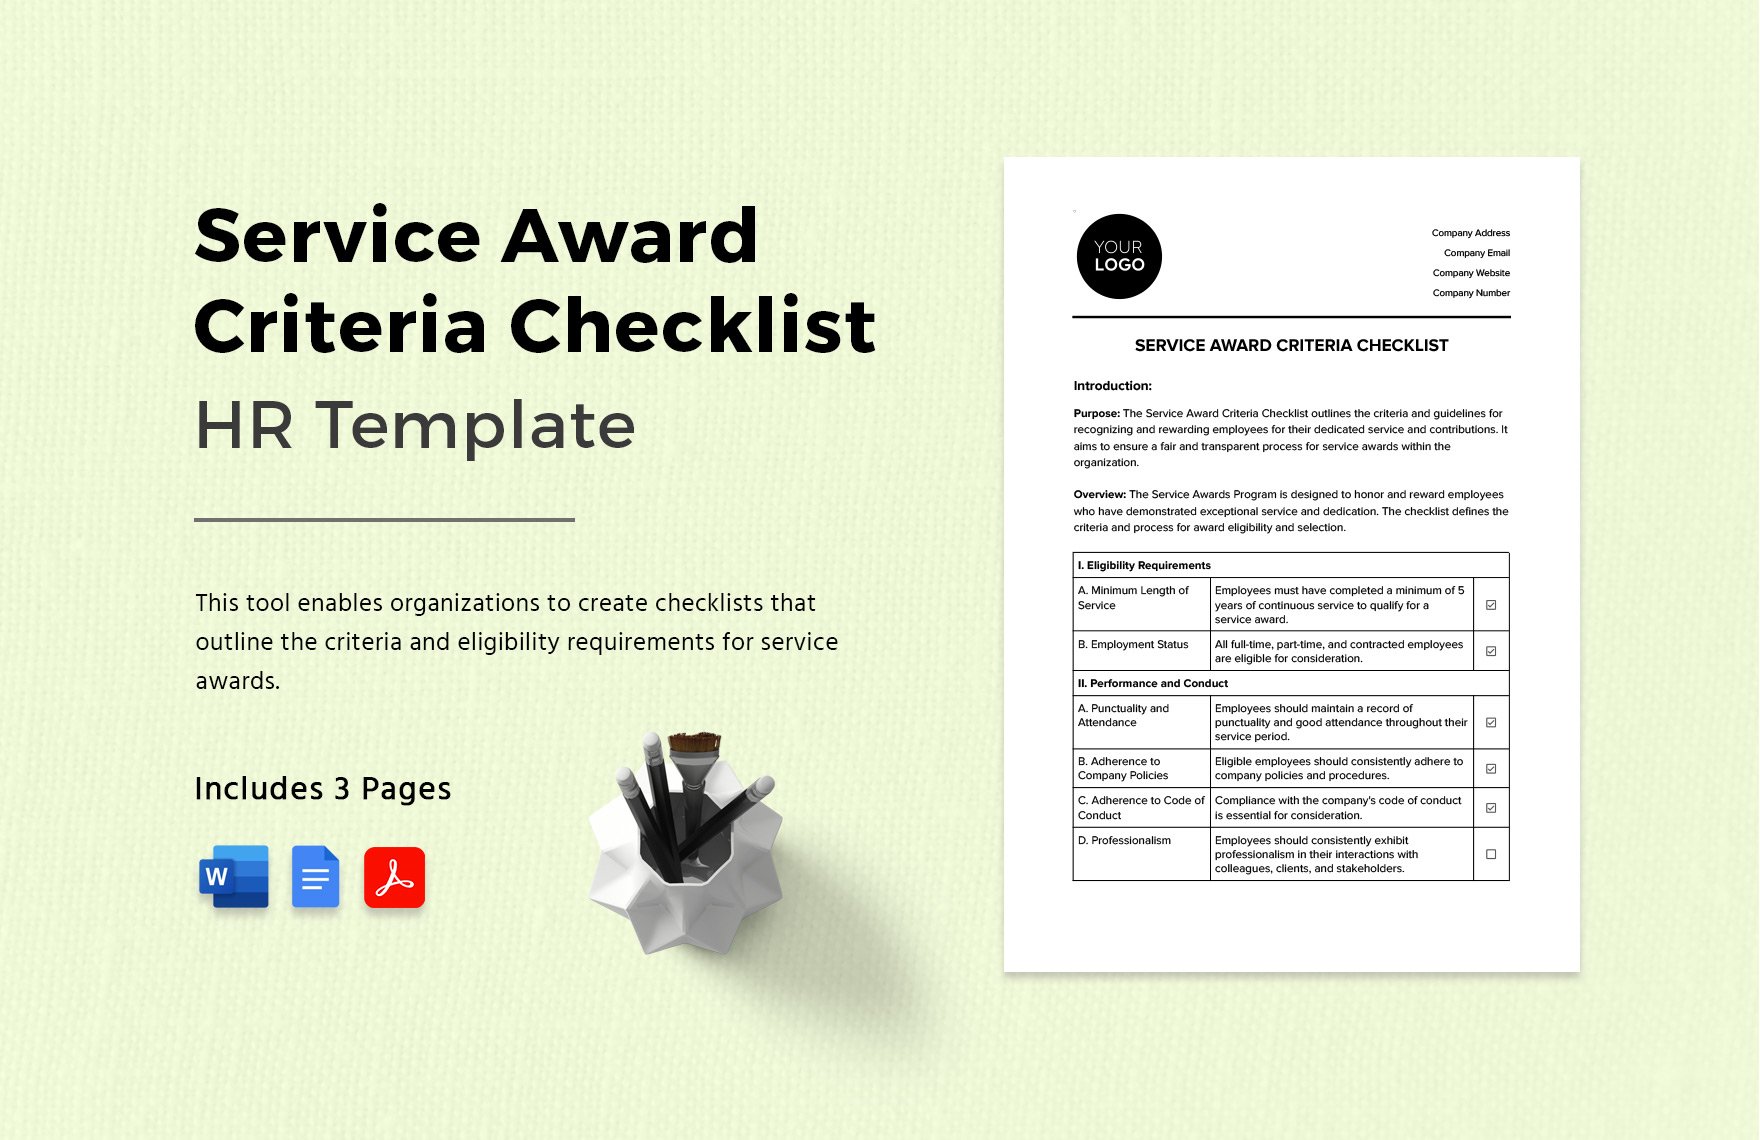 Service Award Criteria Checklist HR Template